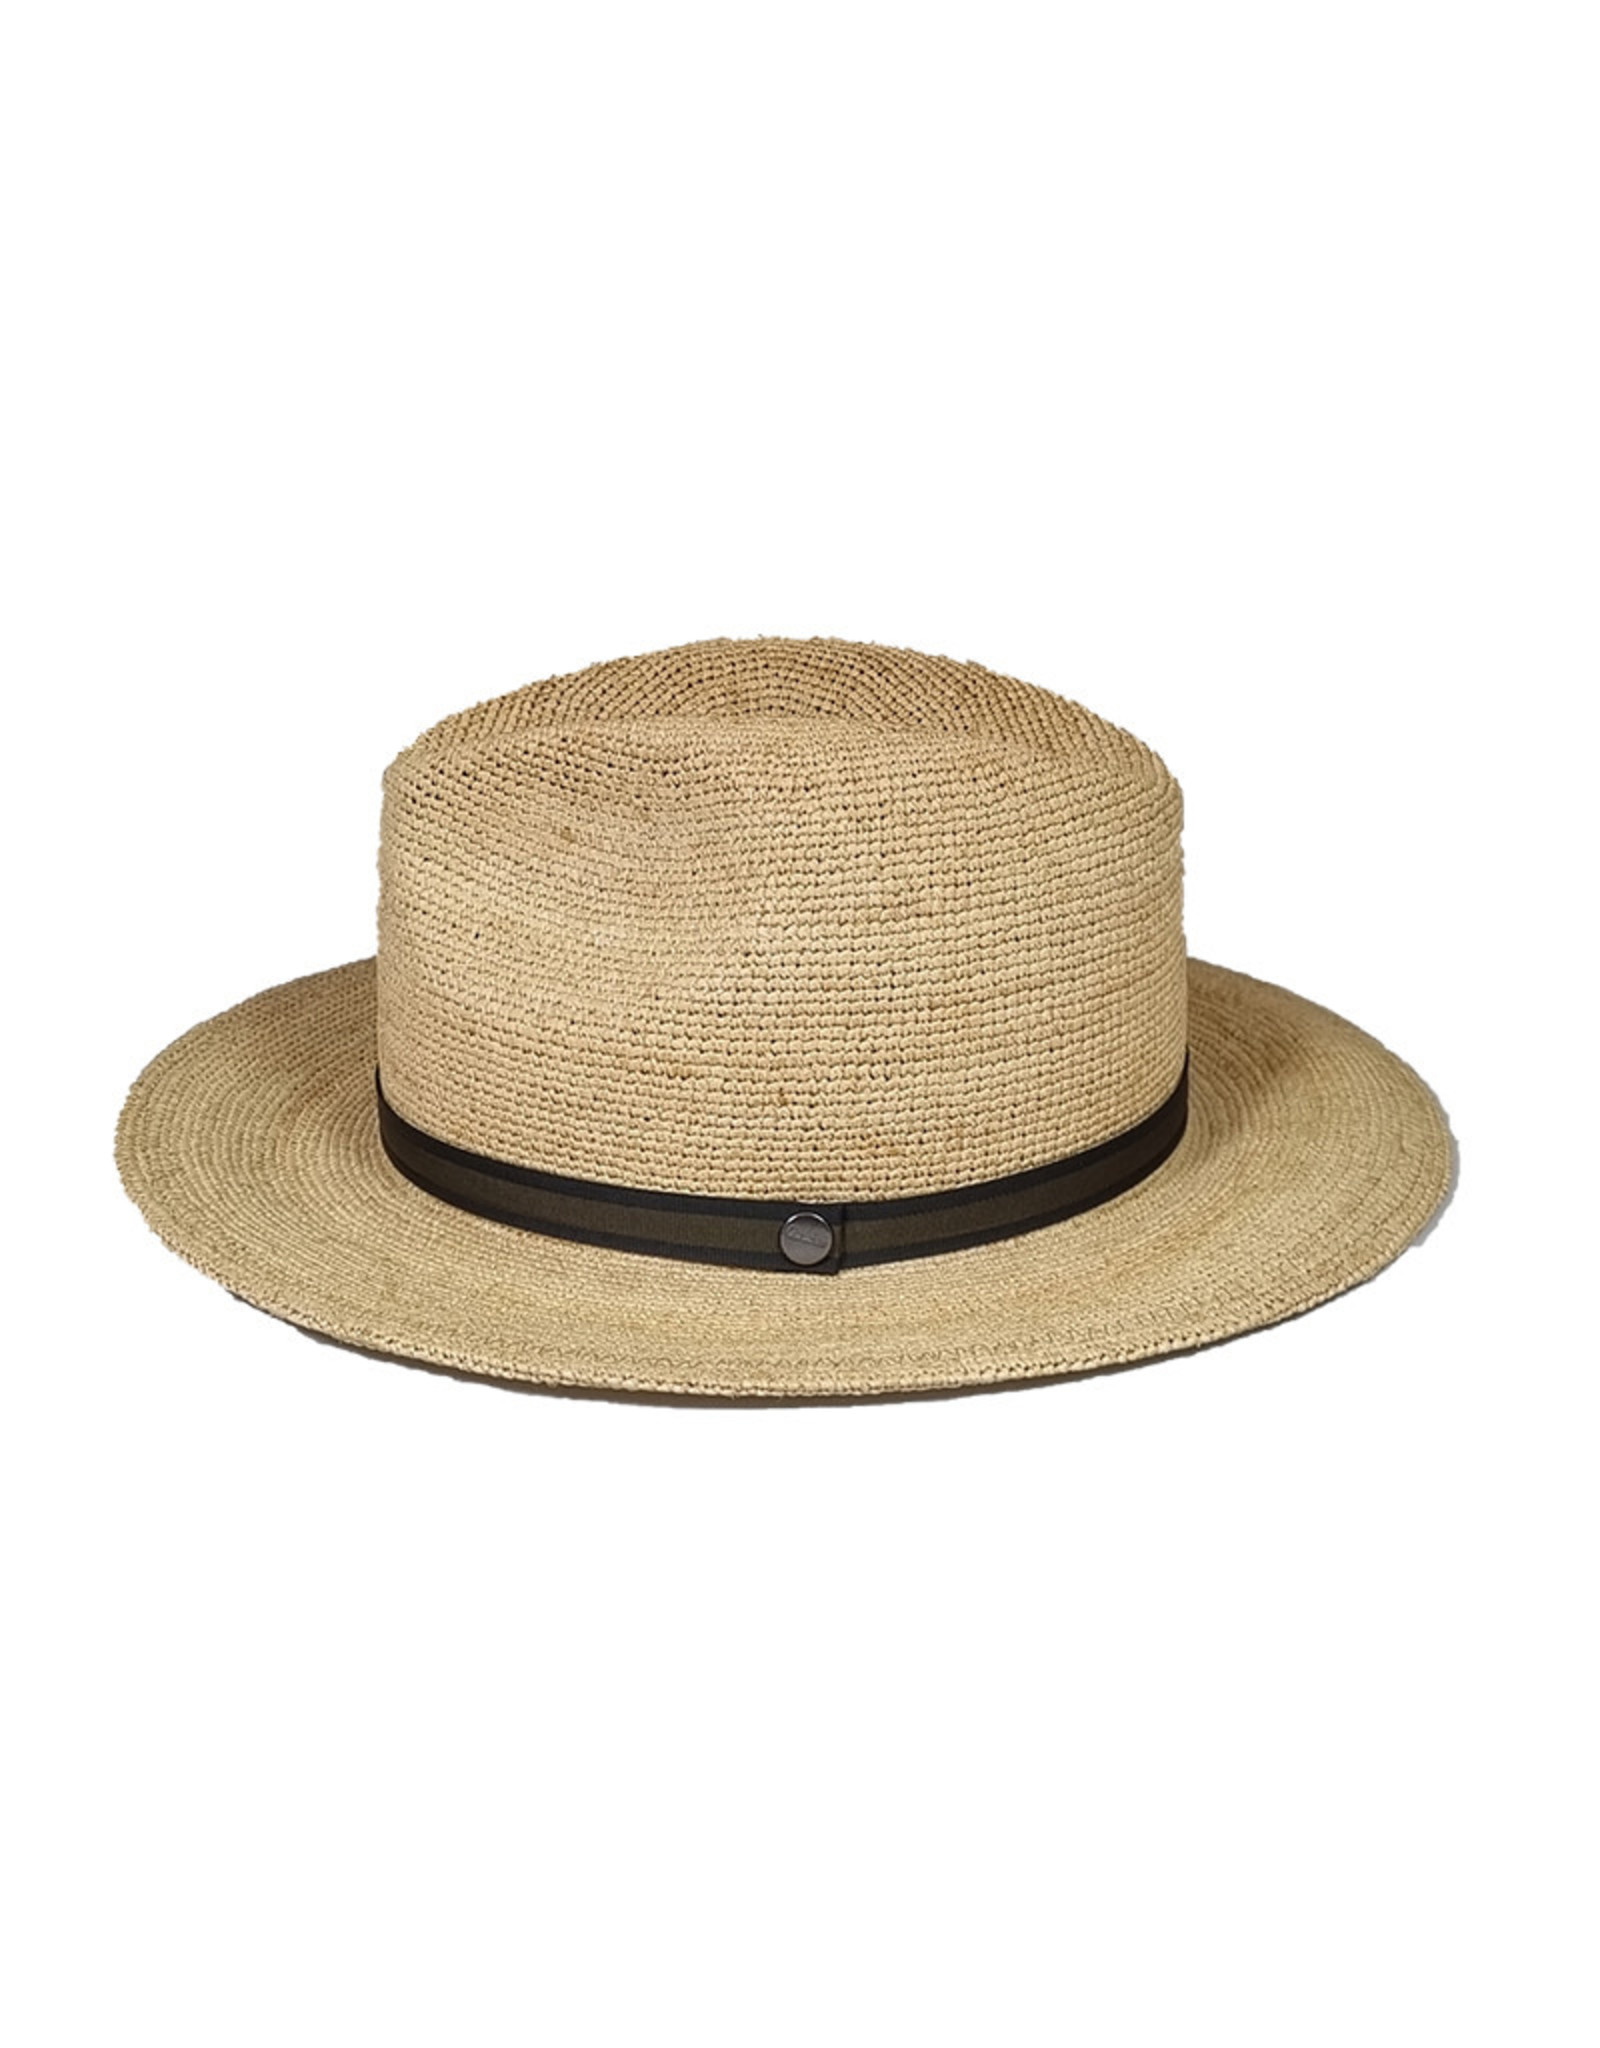 Borsalino Borsalino summer straw hat